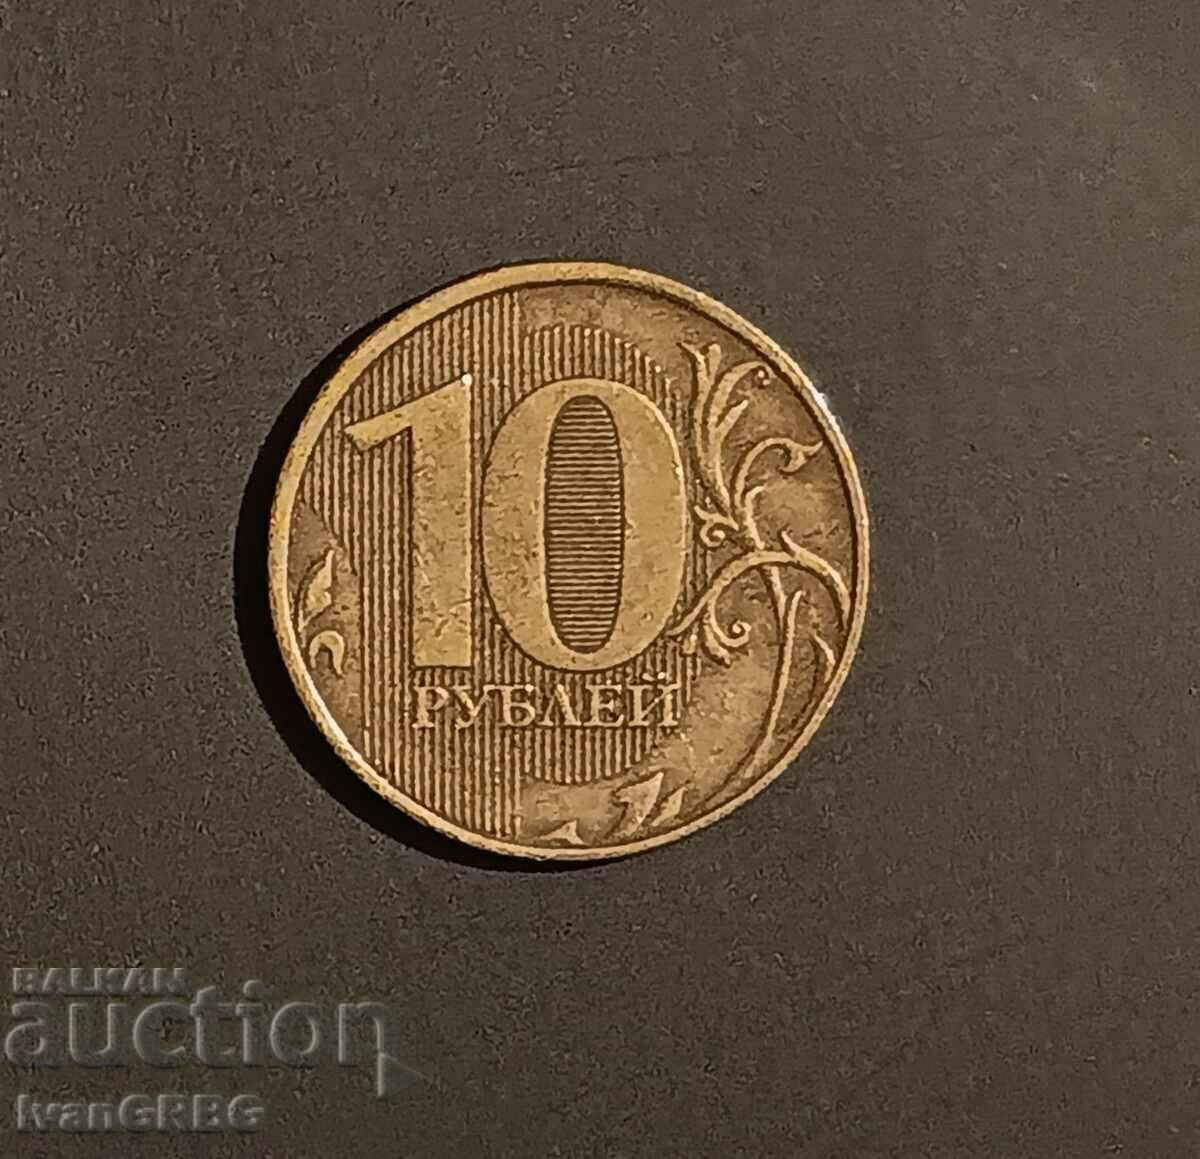 10 rubles Russia 2012 Russian coin